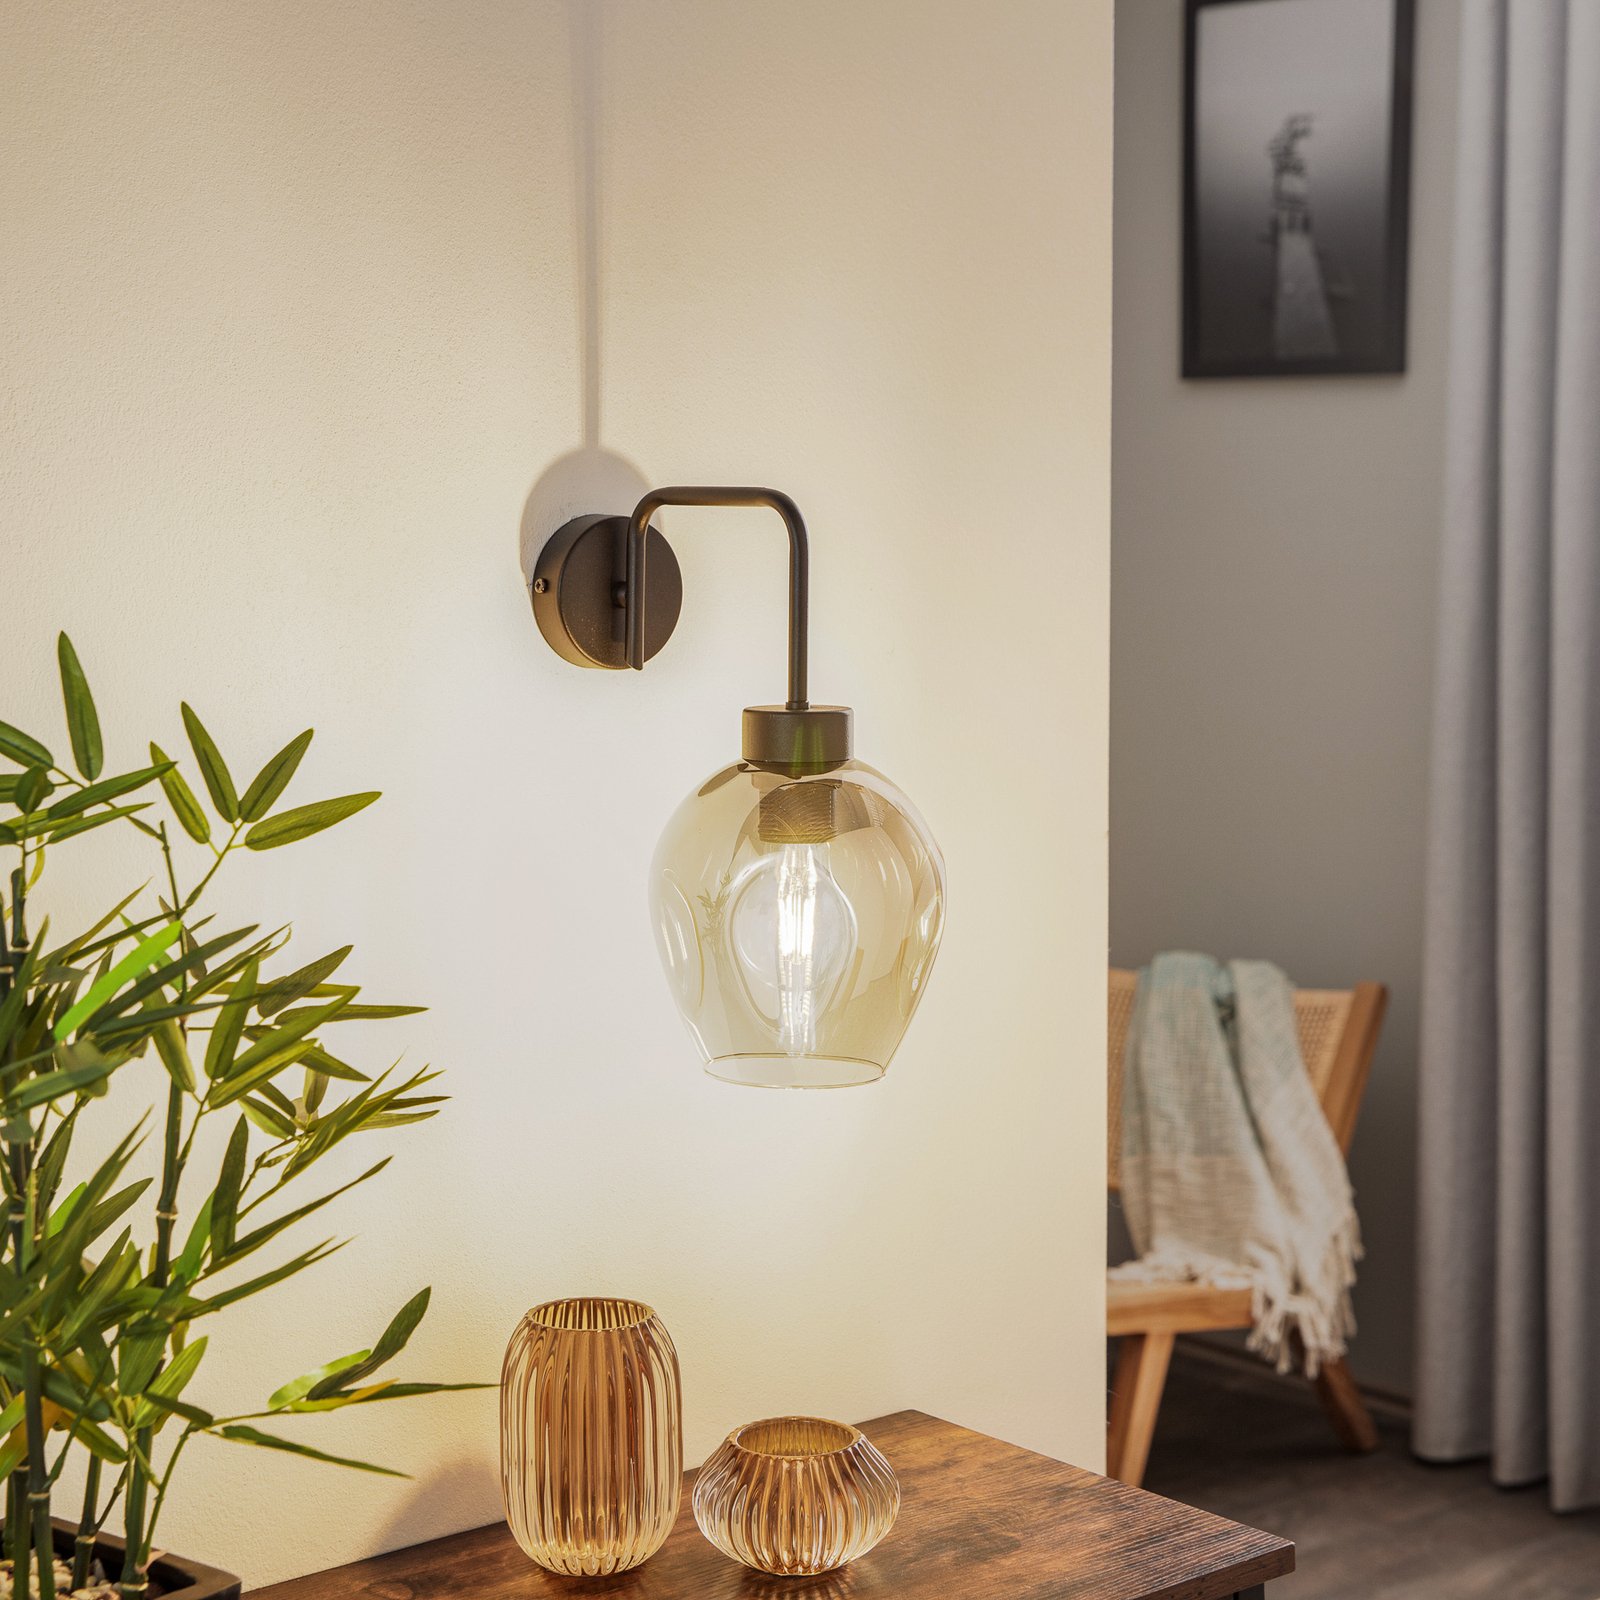 Lukka wall light, one-bulb, black/graphite